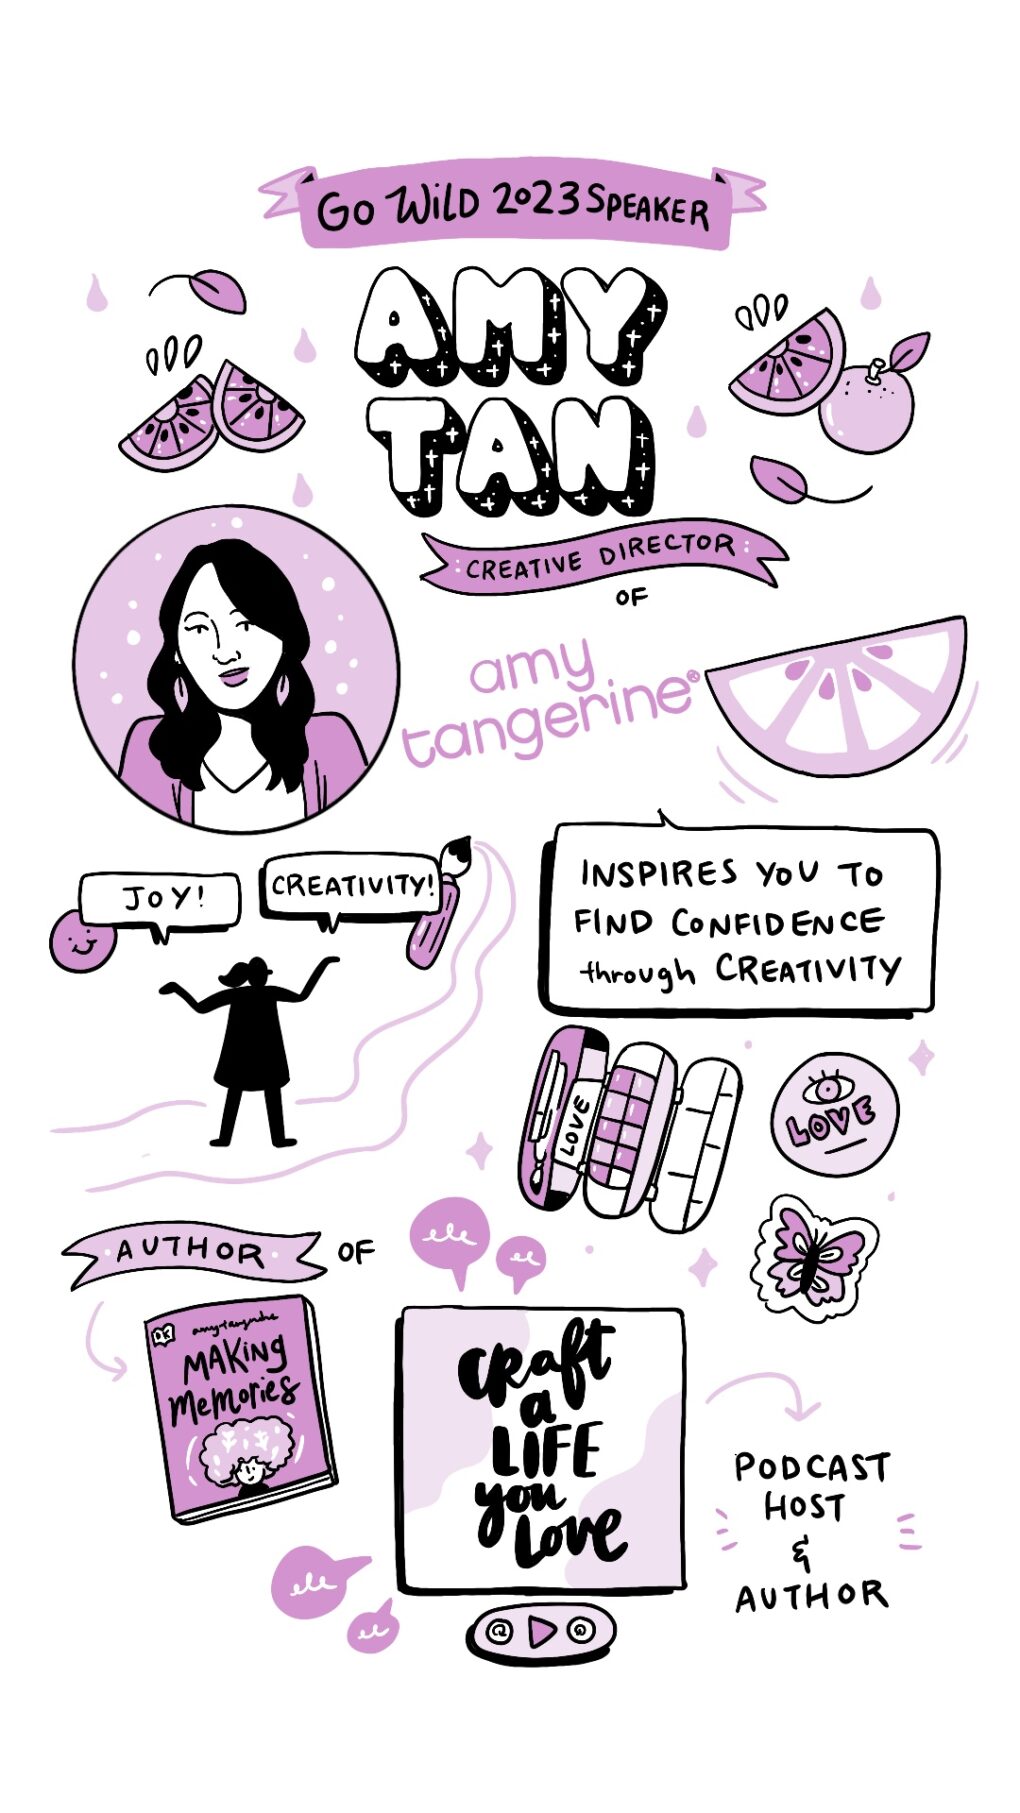 ImageThink visual biography of Go Wild 2023 Speaker Amy Tan.